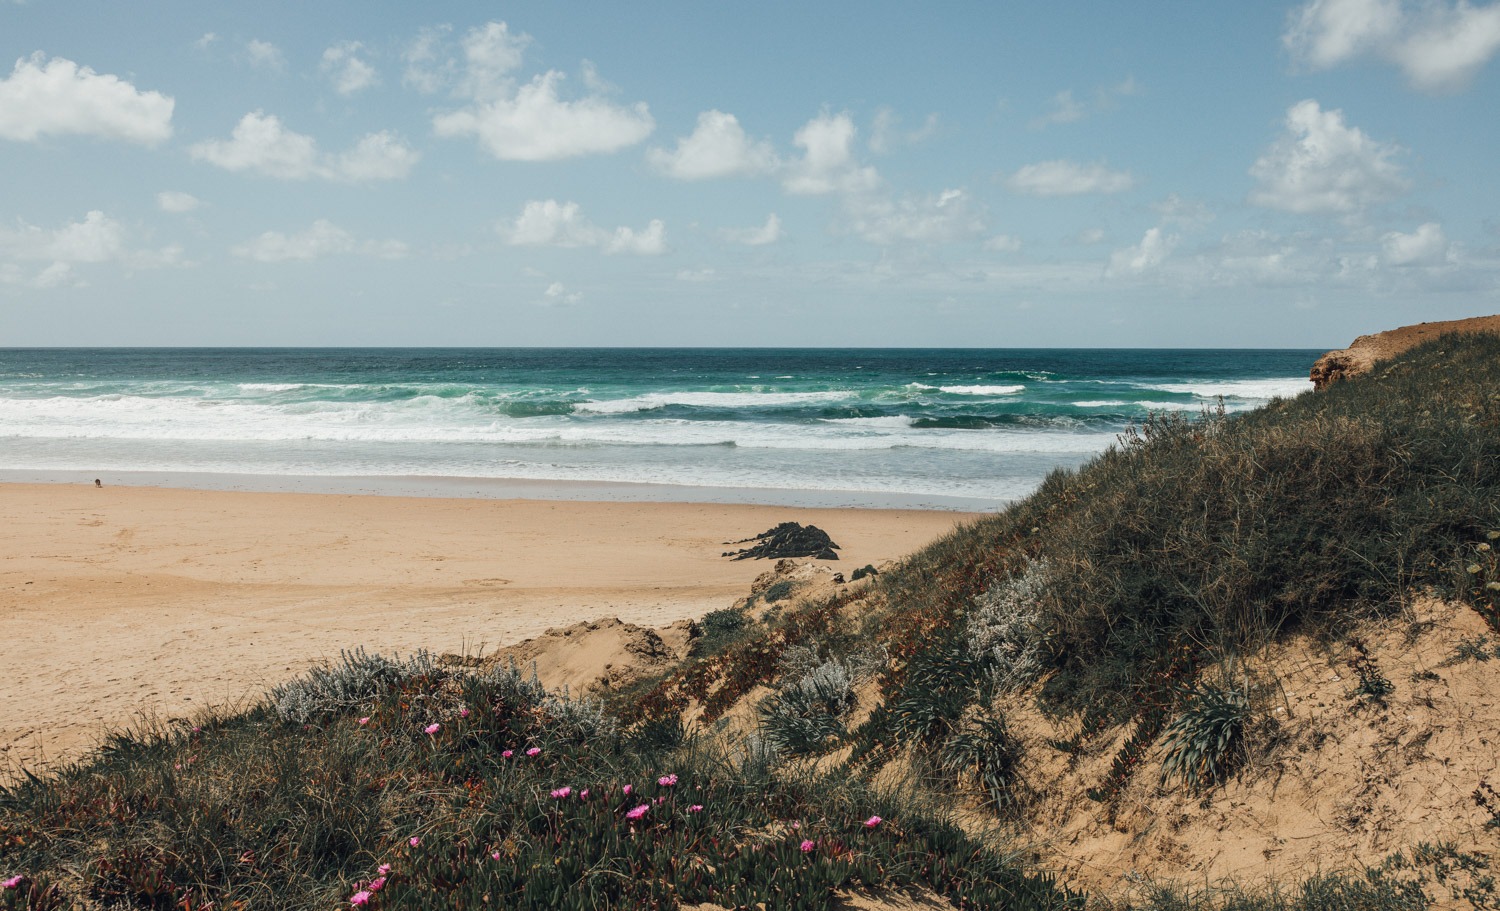 Surfing in the Algarve